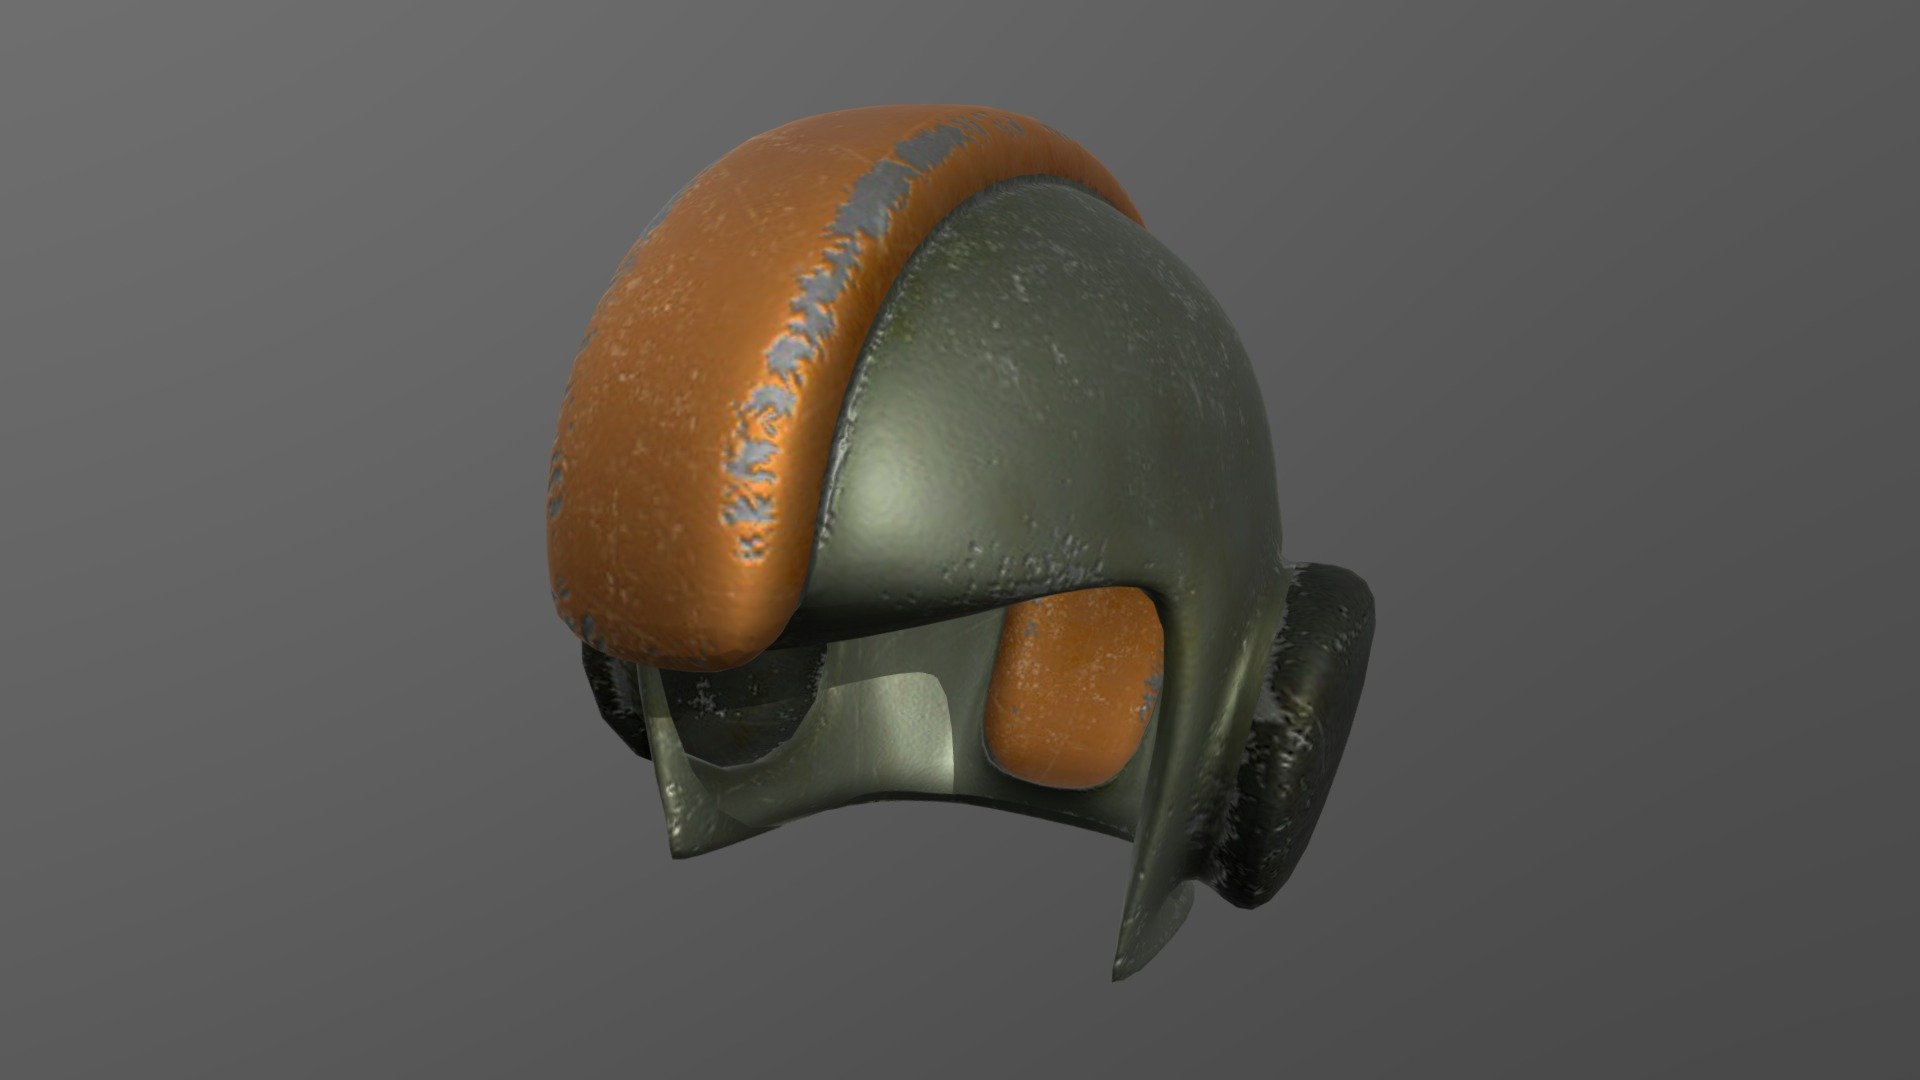 An evil and diabolical super villain helmet.

*1 mesh (medium poly) with textures and materials 3d model